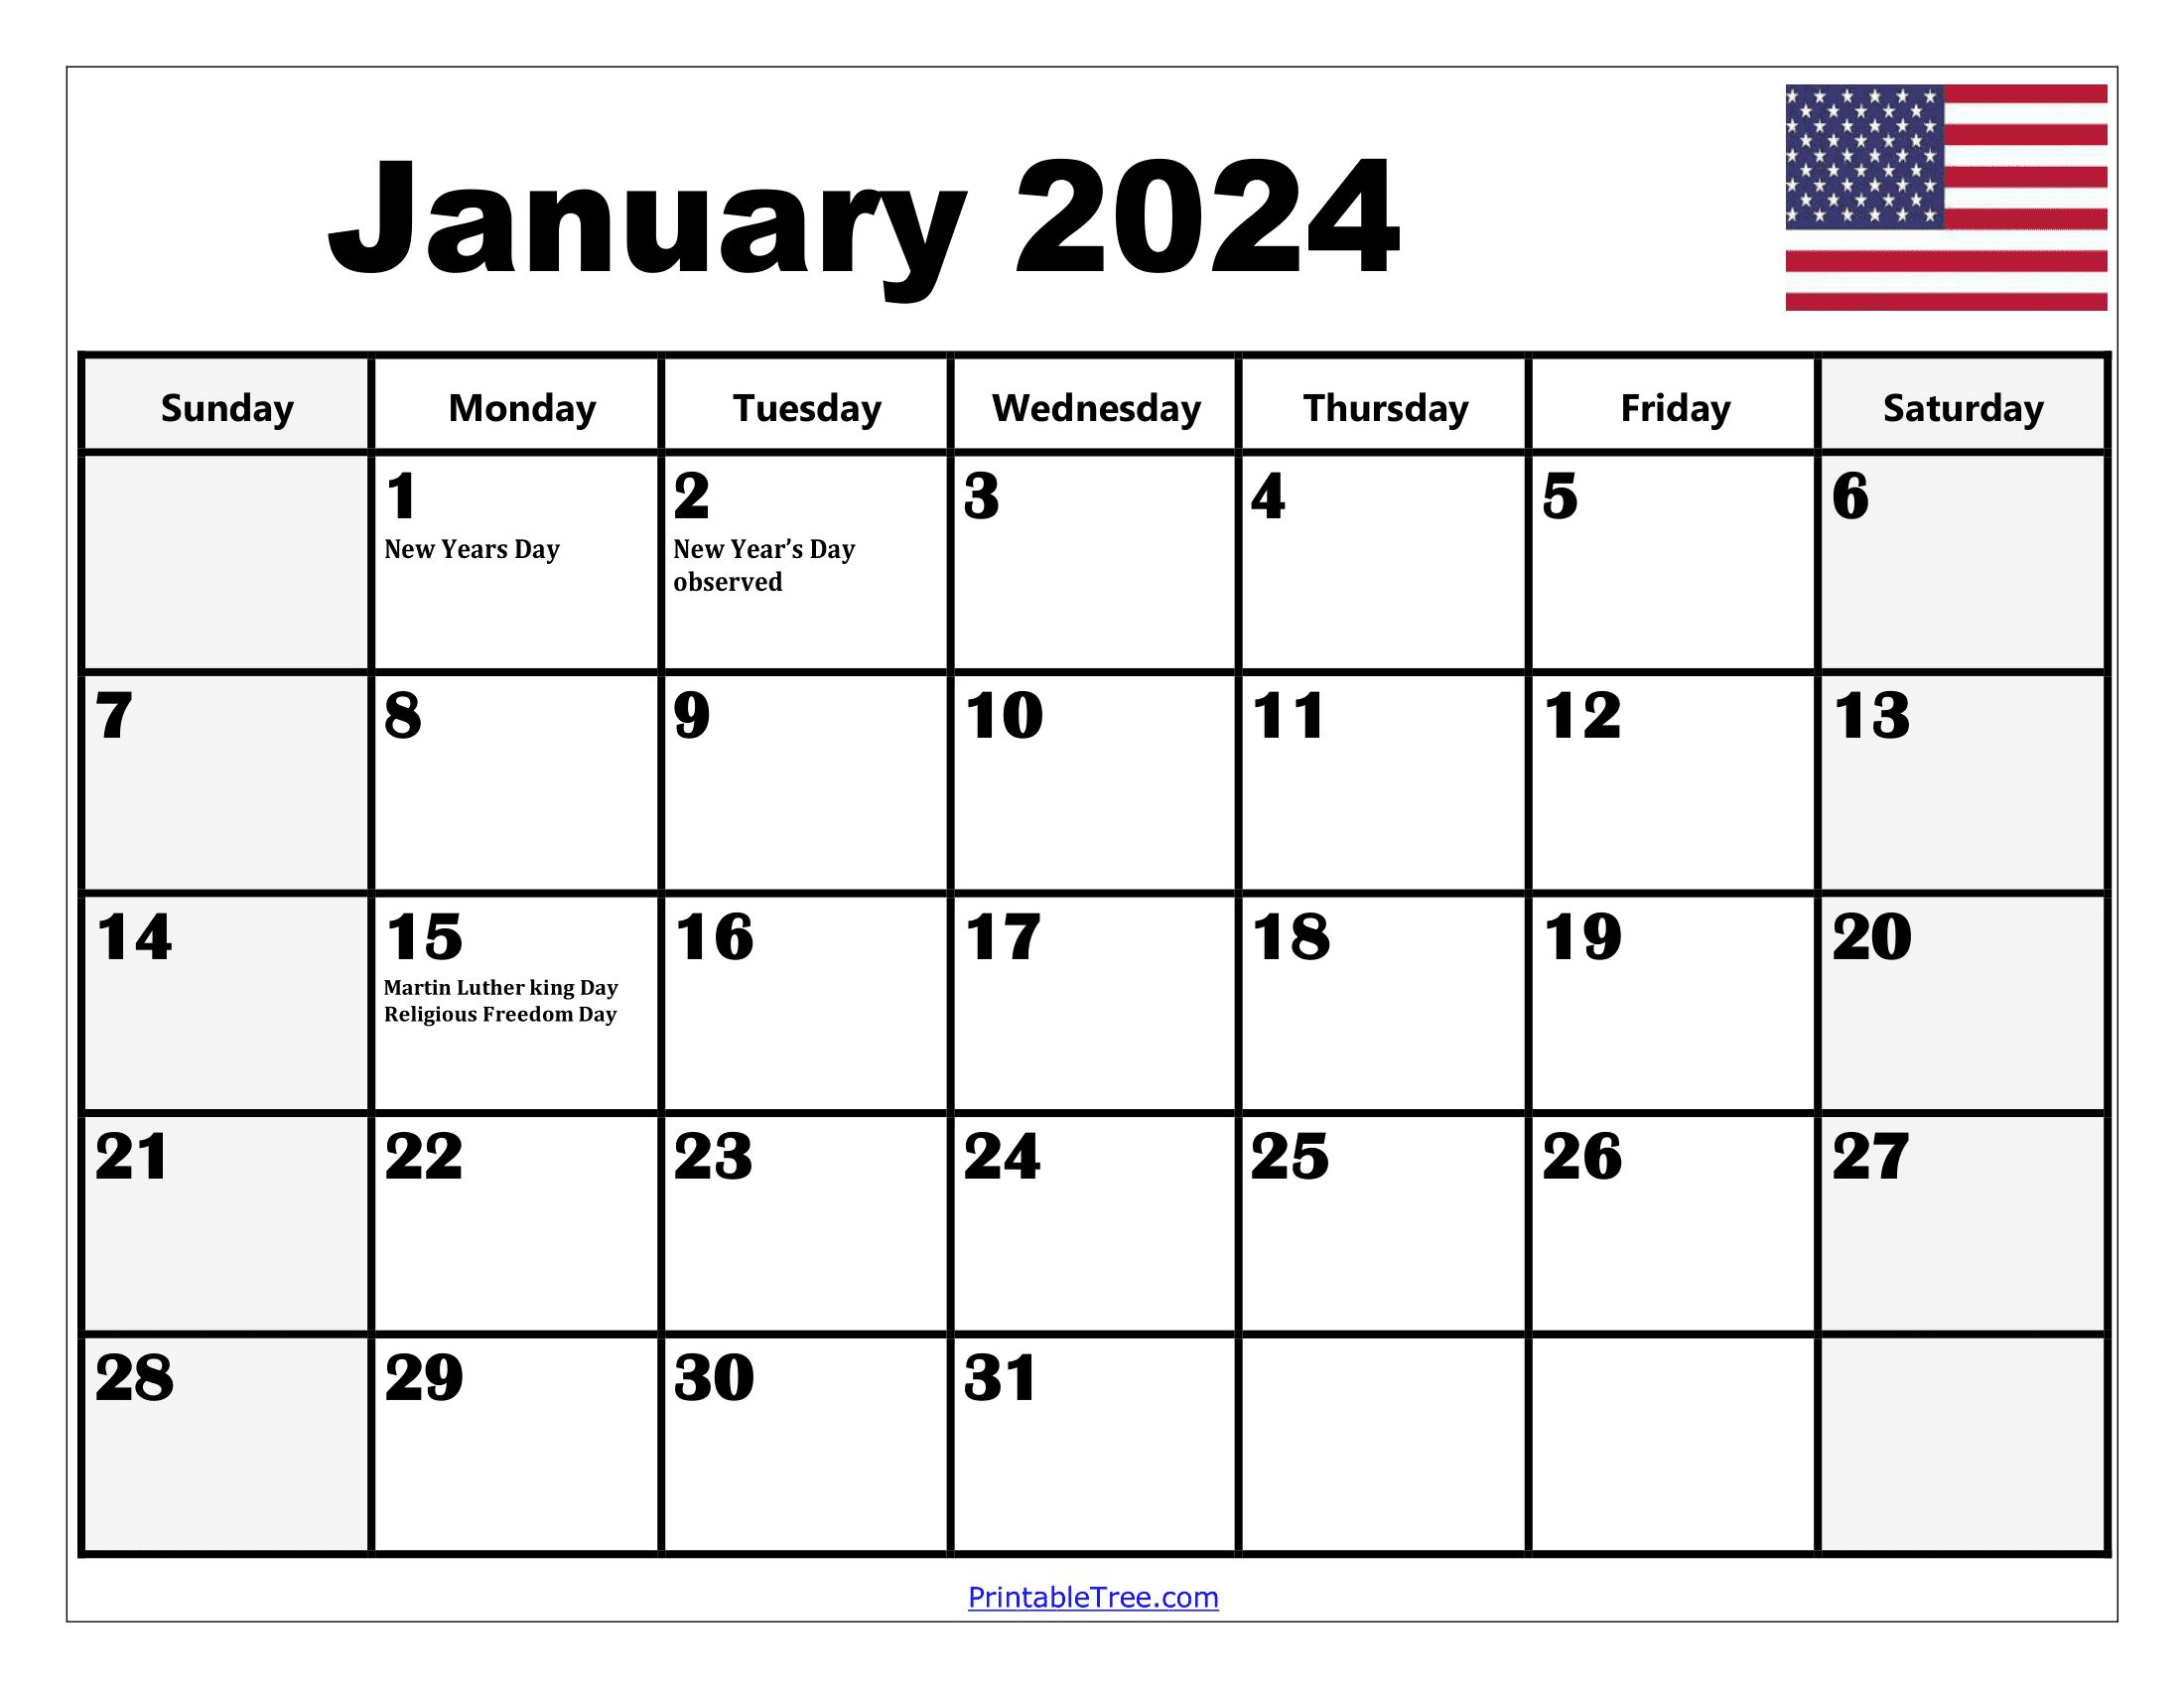 January 2024 Calendar Printable Pdf Template With Holidays for January 2024 Calendar Printable With Holidays